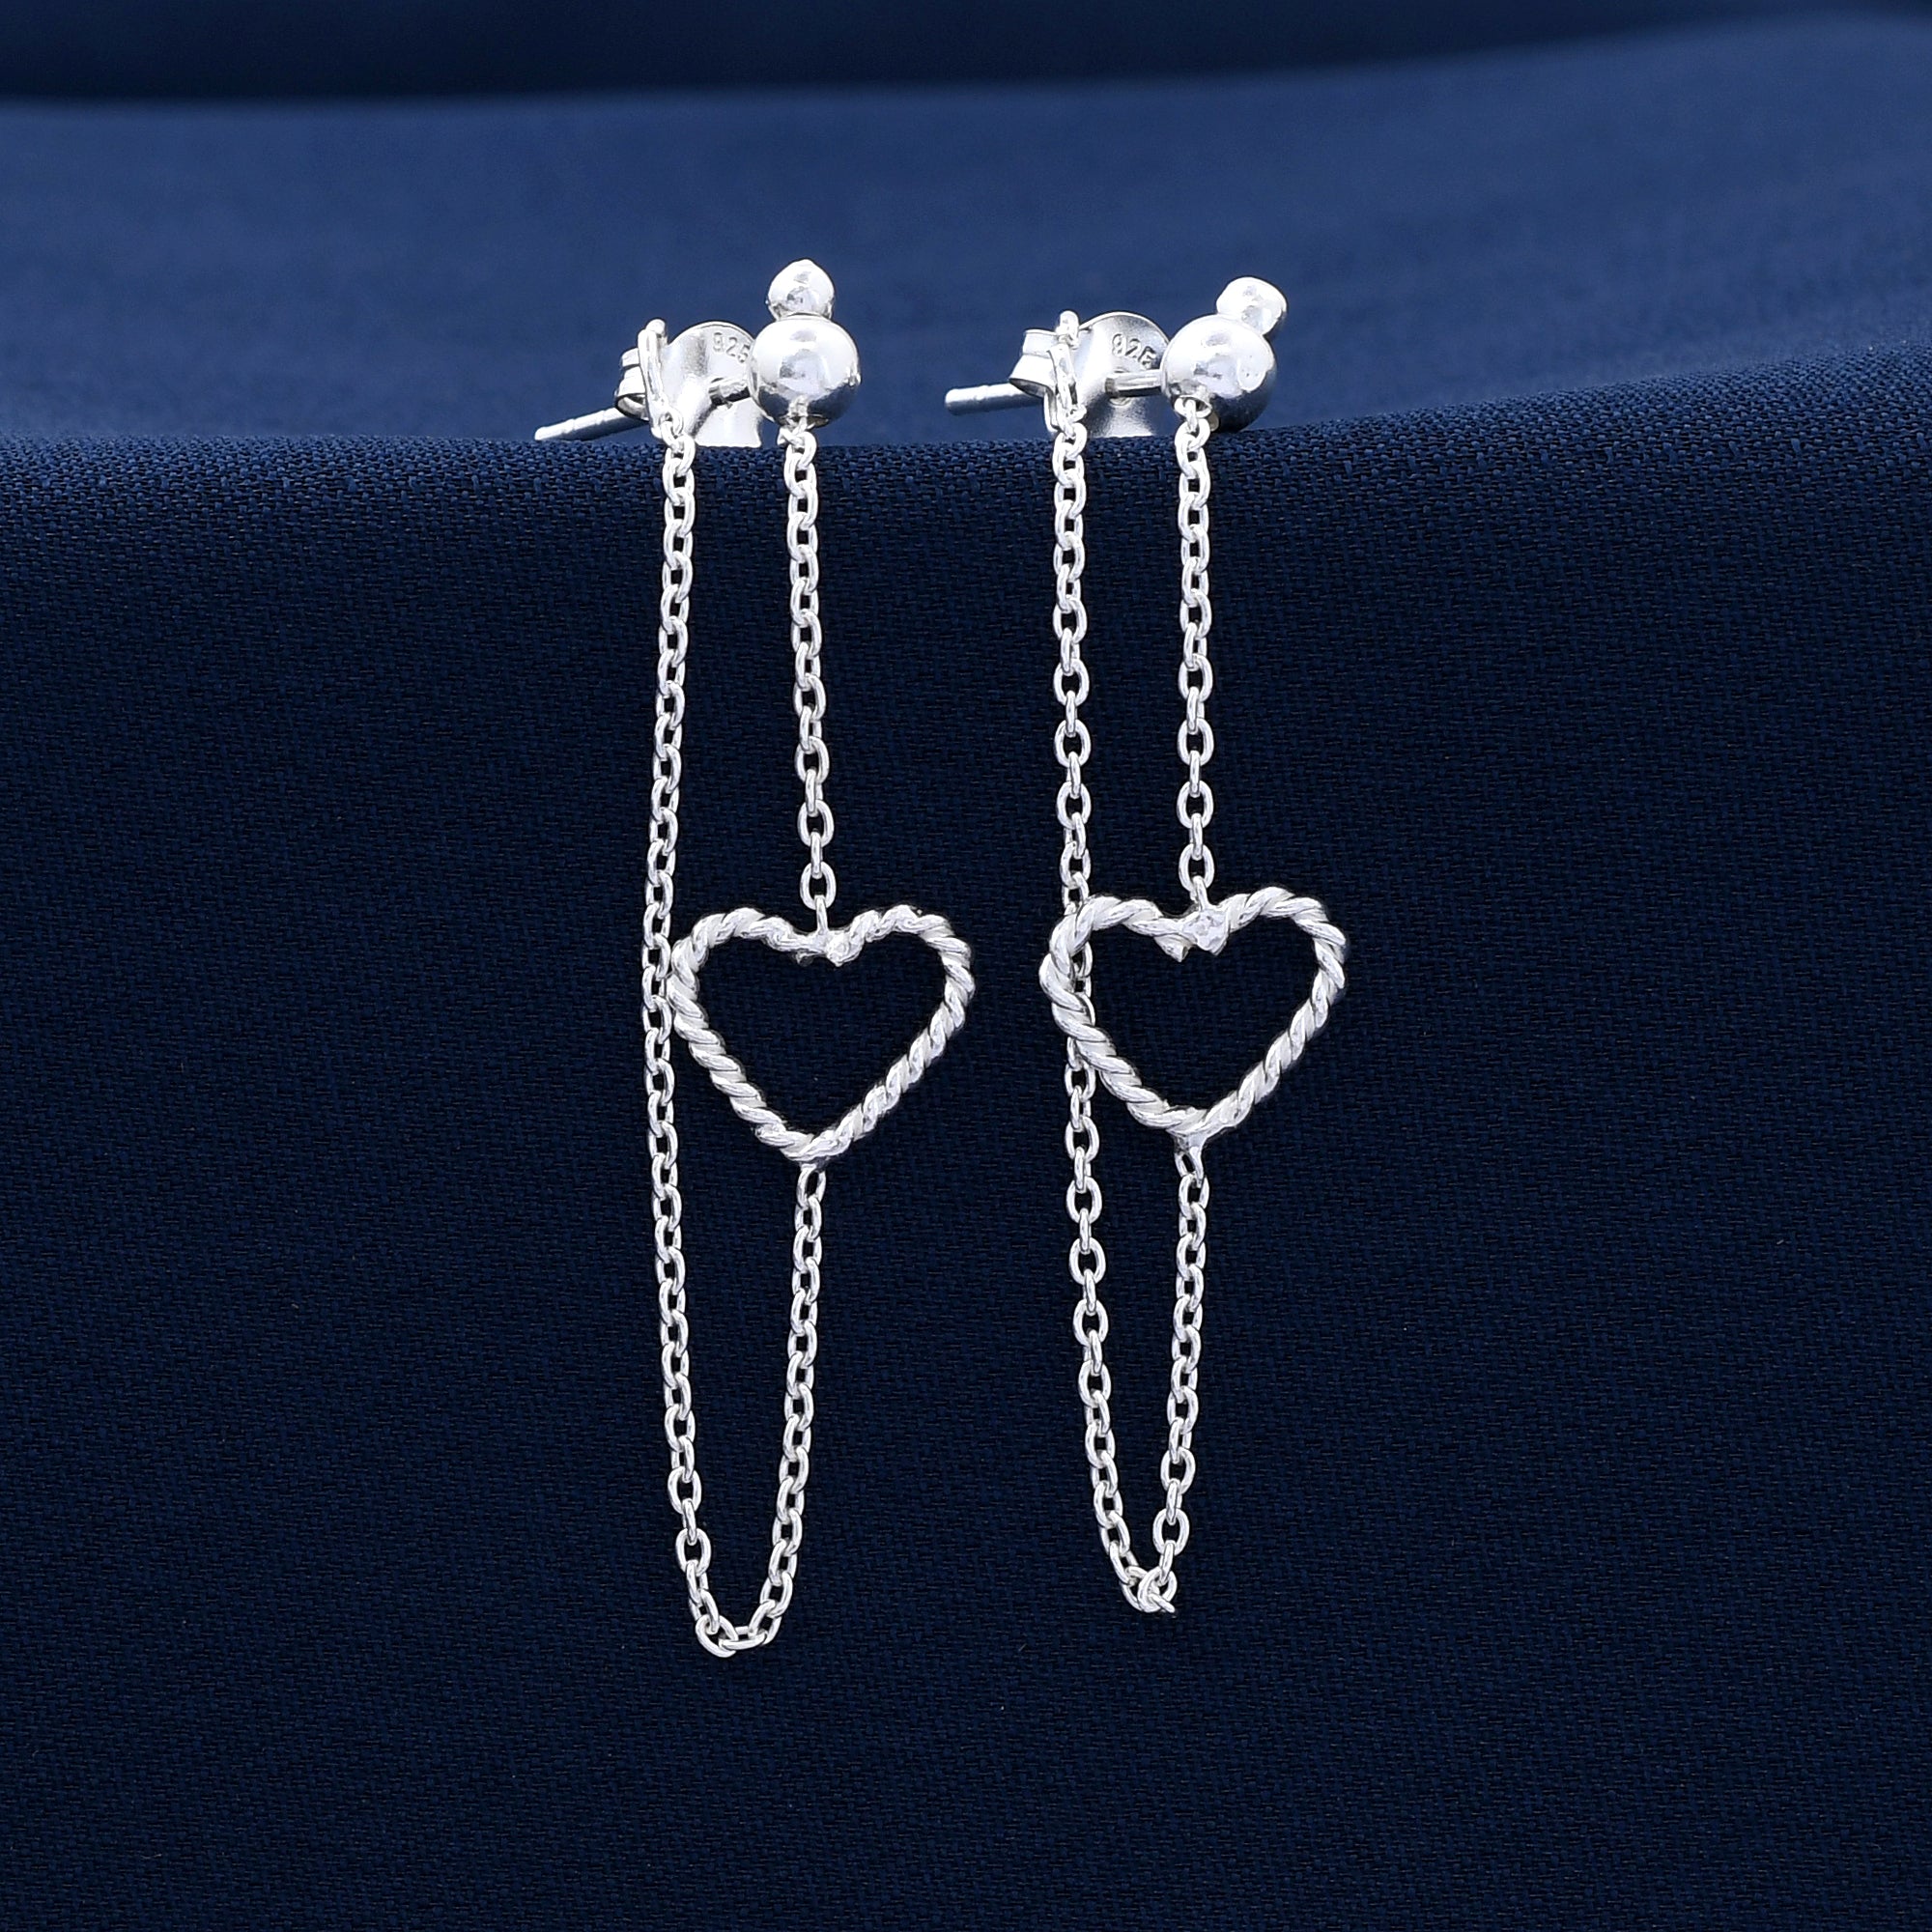 Double Chain Heart Design 925 Sterling Silver Earring